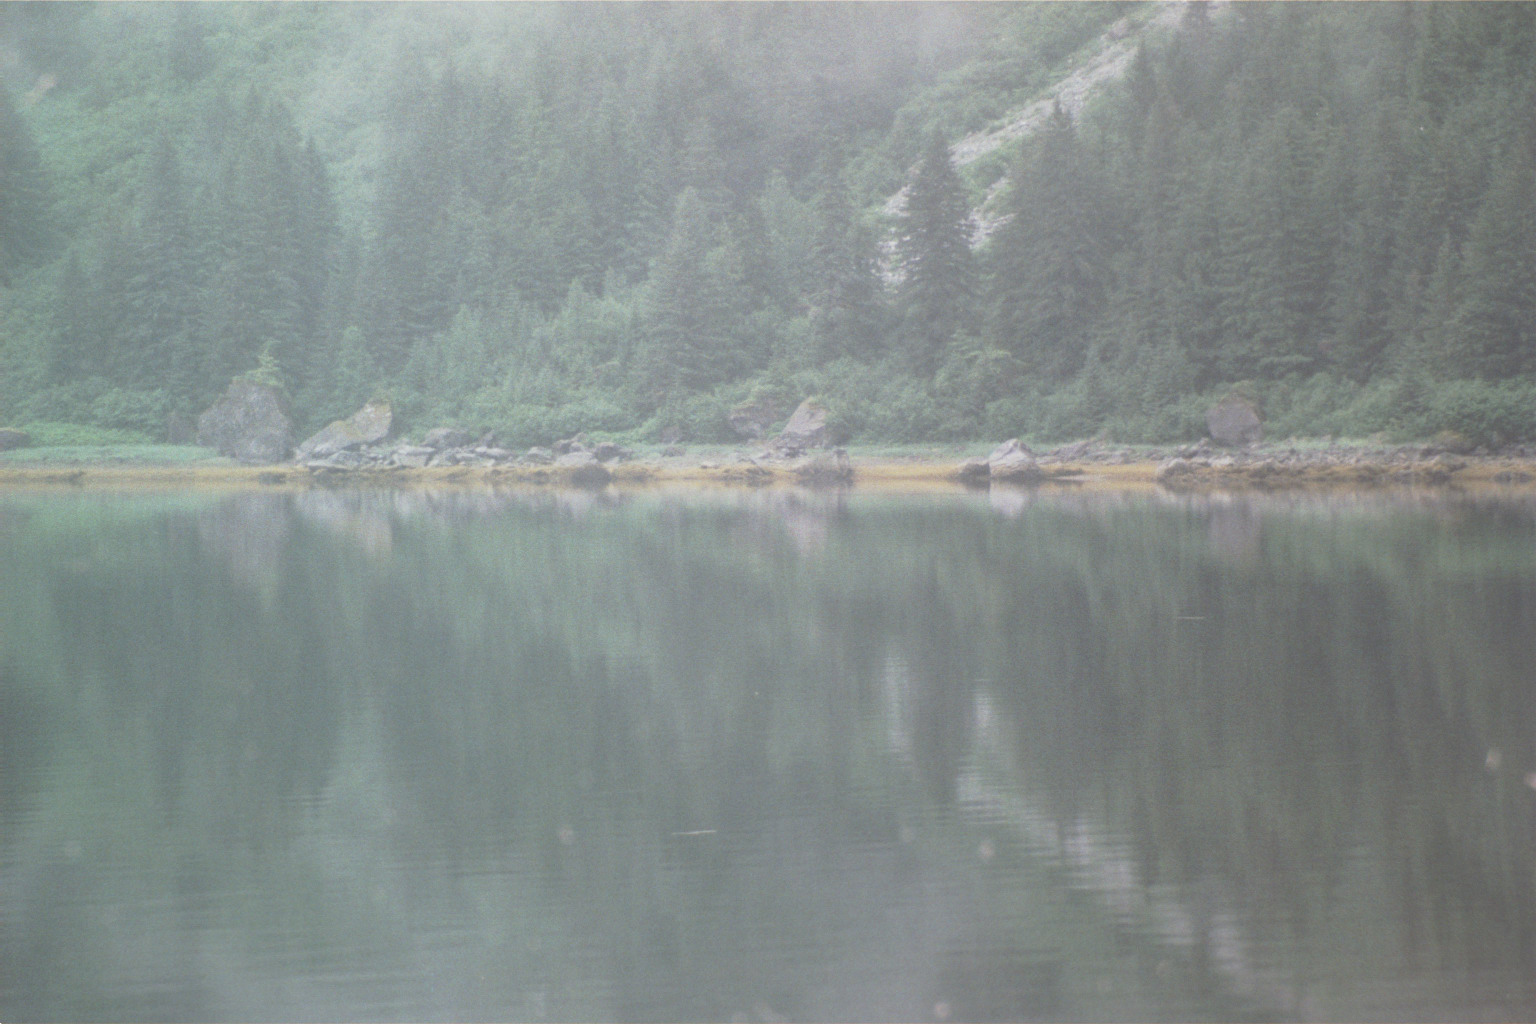 green pine trees reflecting in still waters of alaska